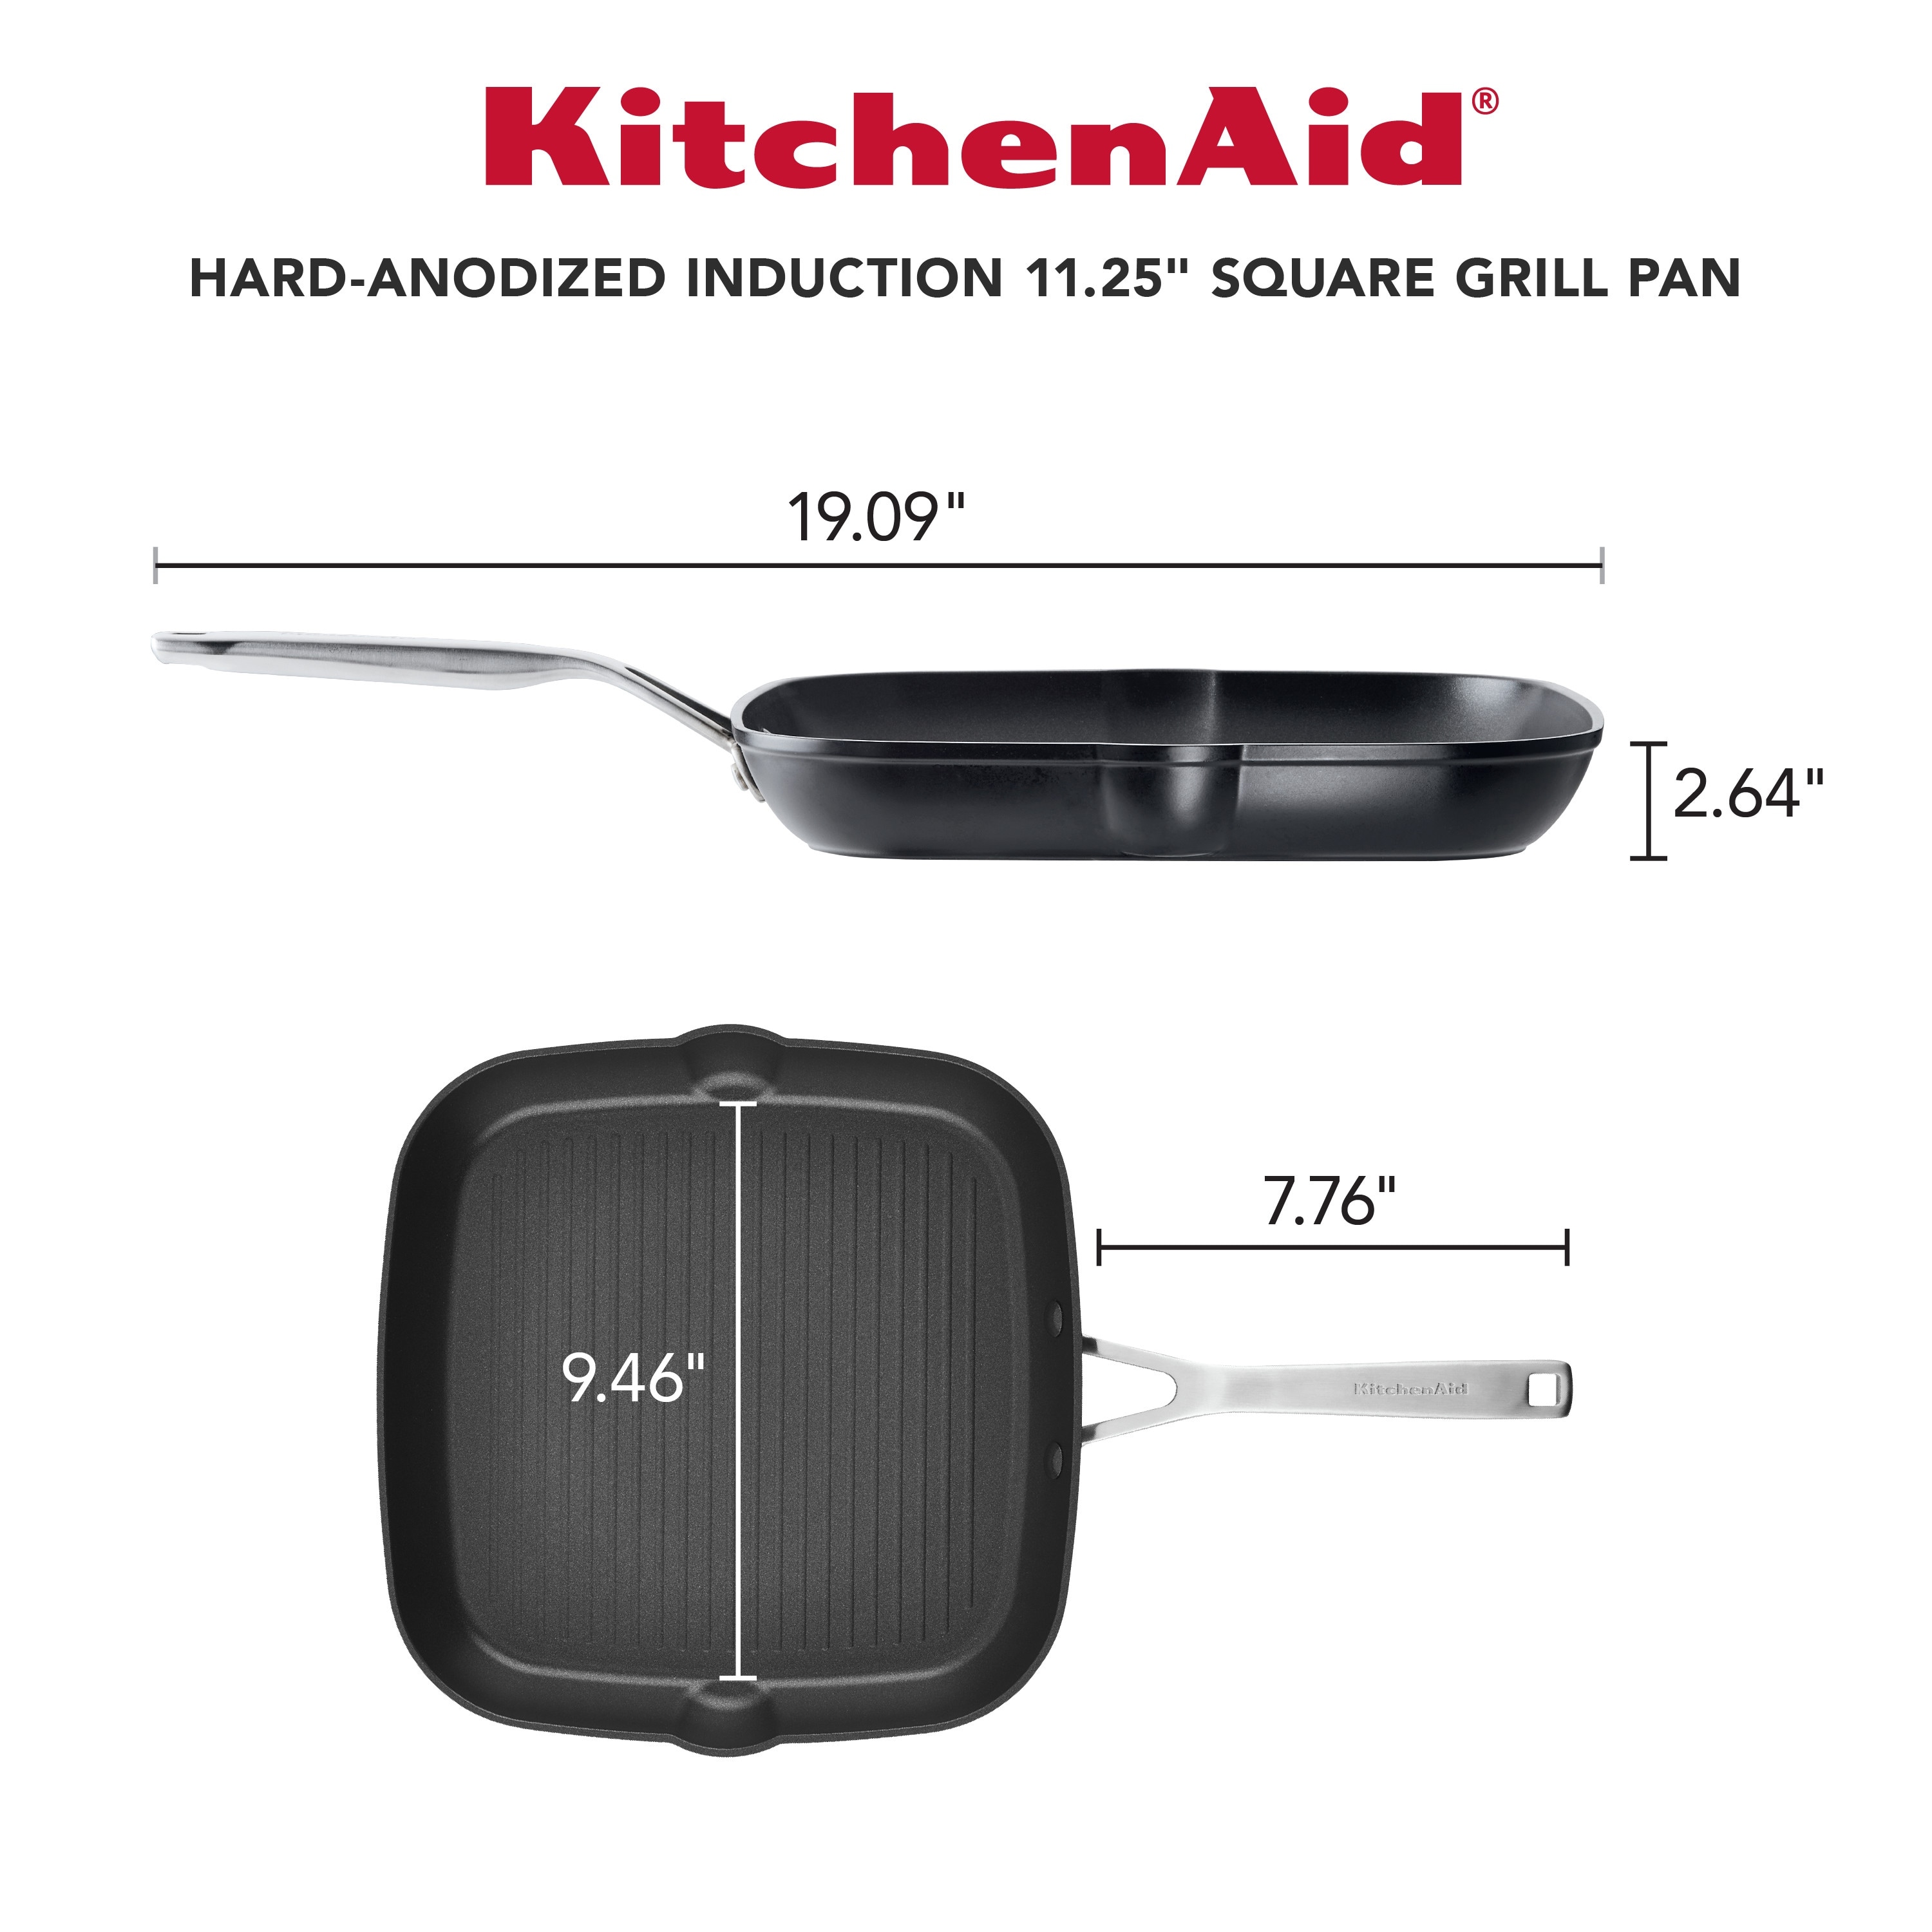 Kitchenaid 11.25 Hard Anodized Nonstick Square Grill Pan Black